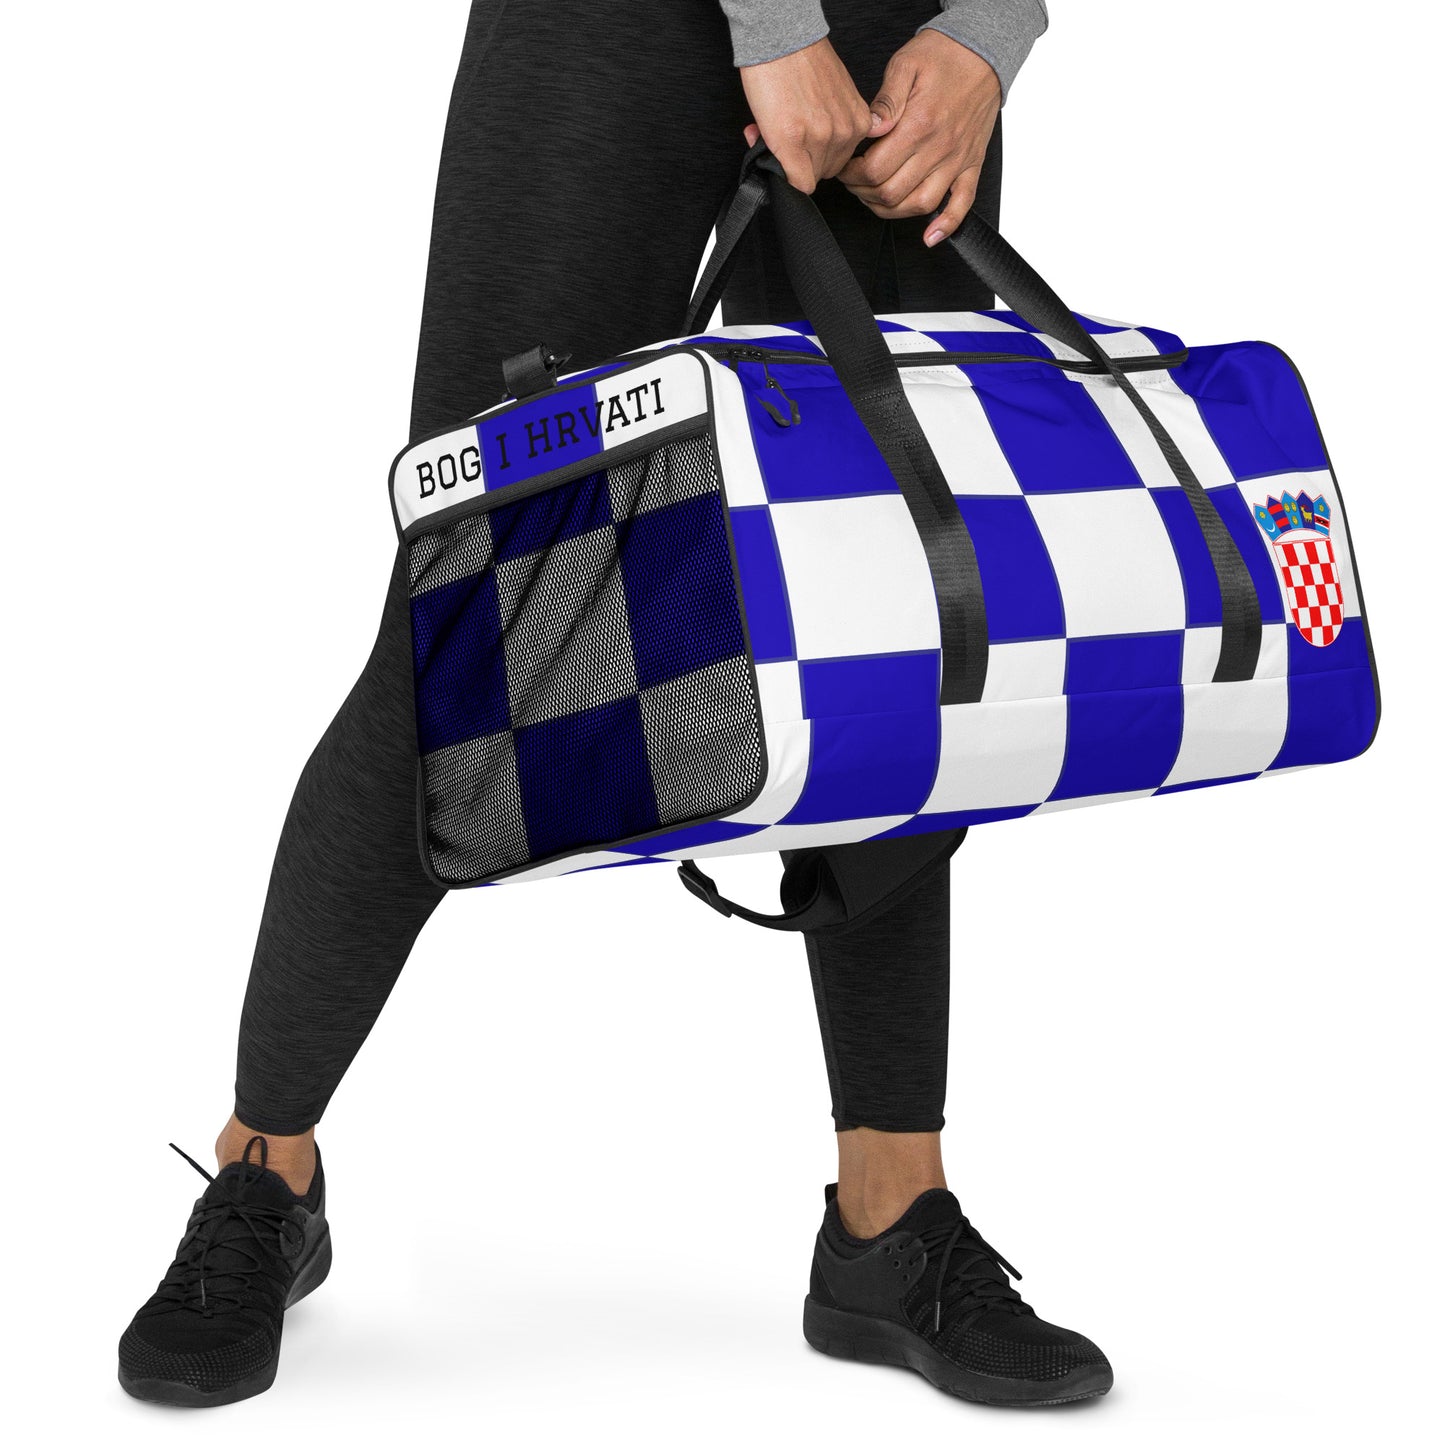 Croatian Blue Checkered 'bog i hrvati' Duffle bag